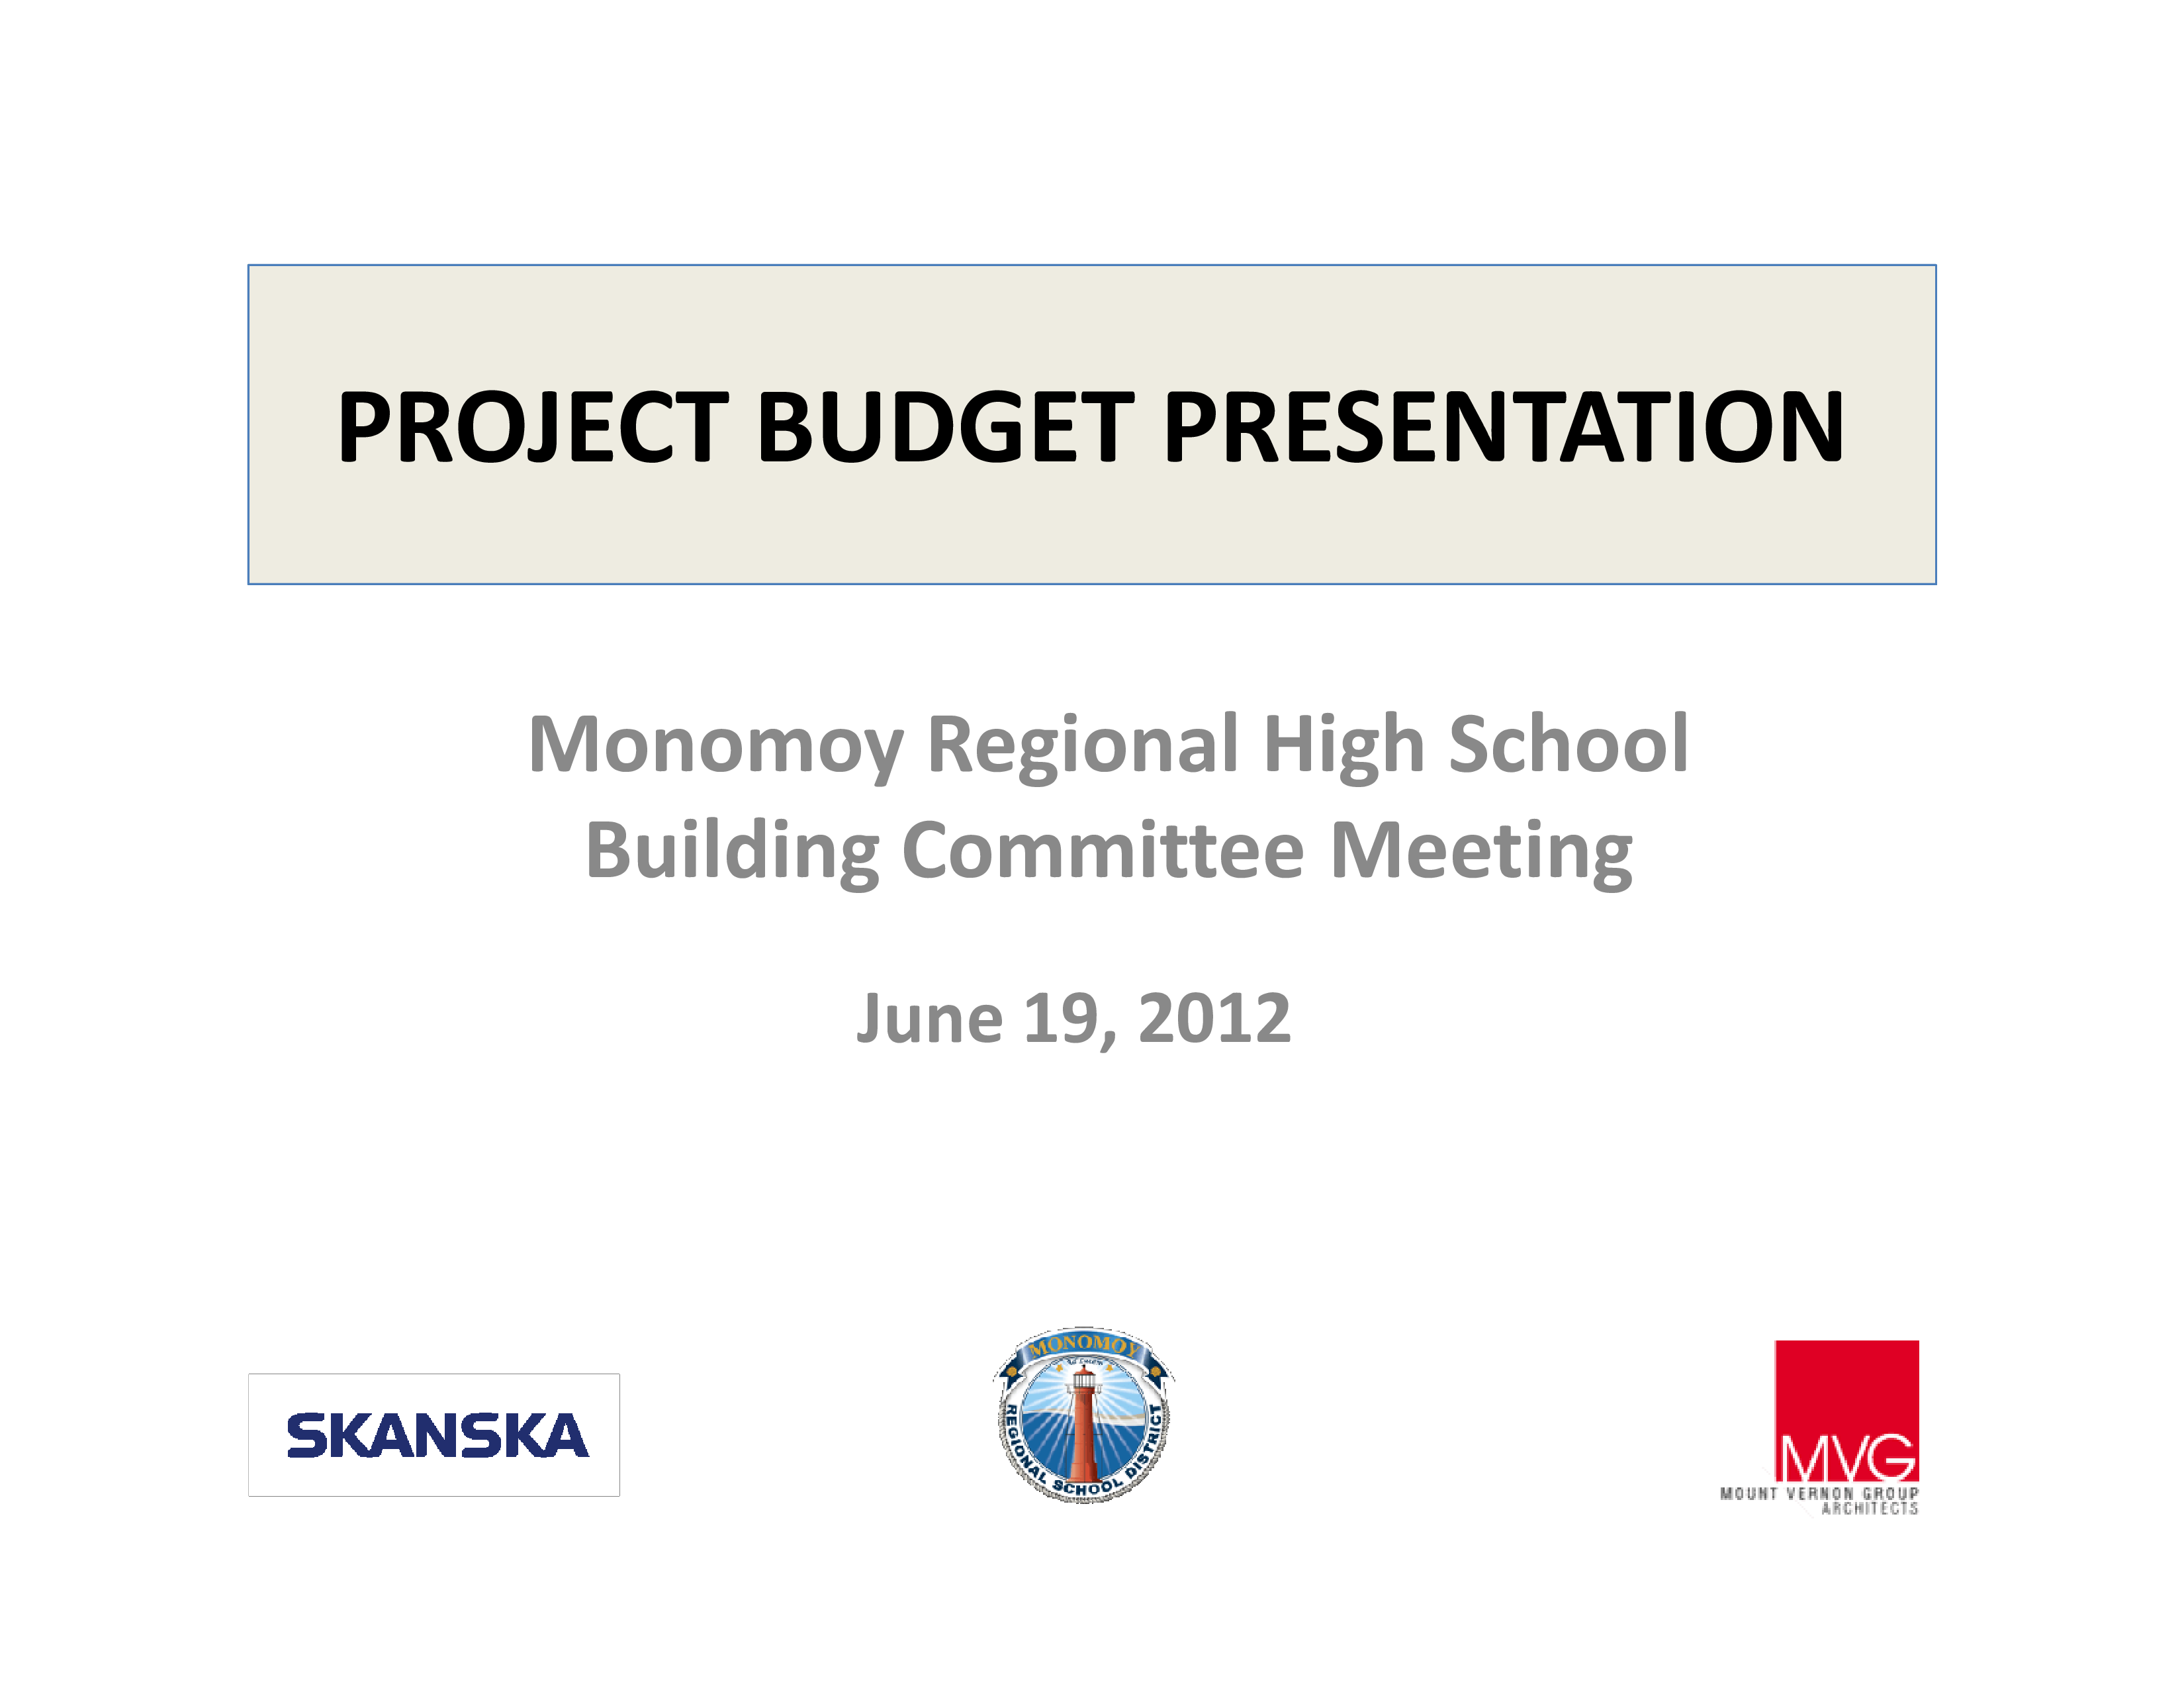 Project Budget Presentation main image